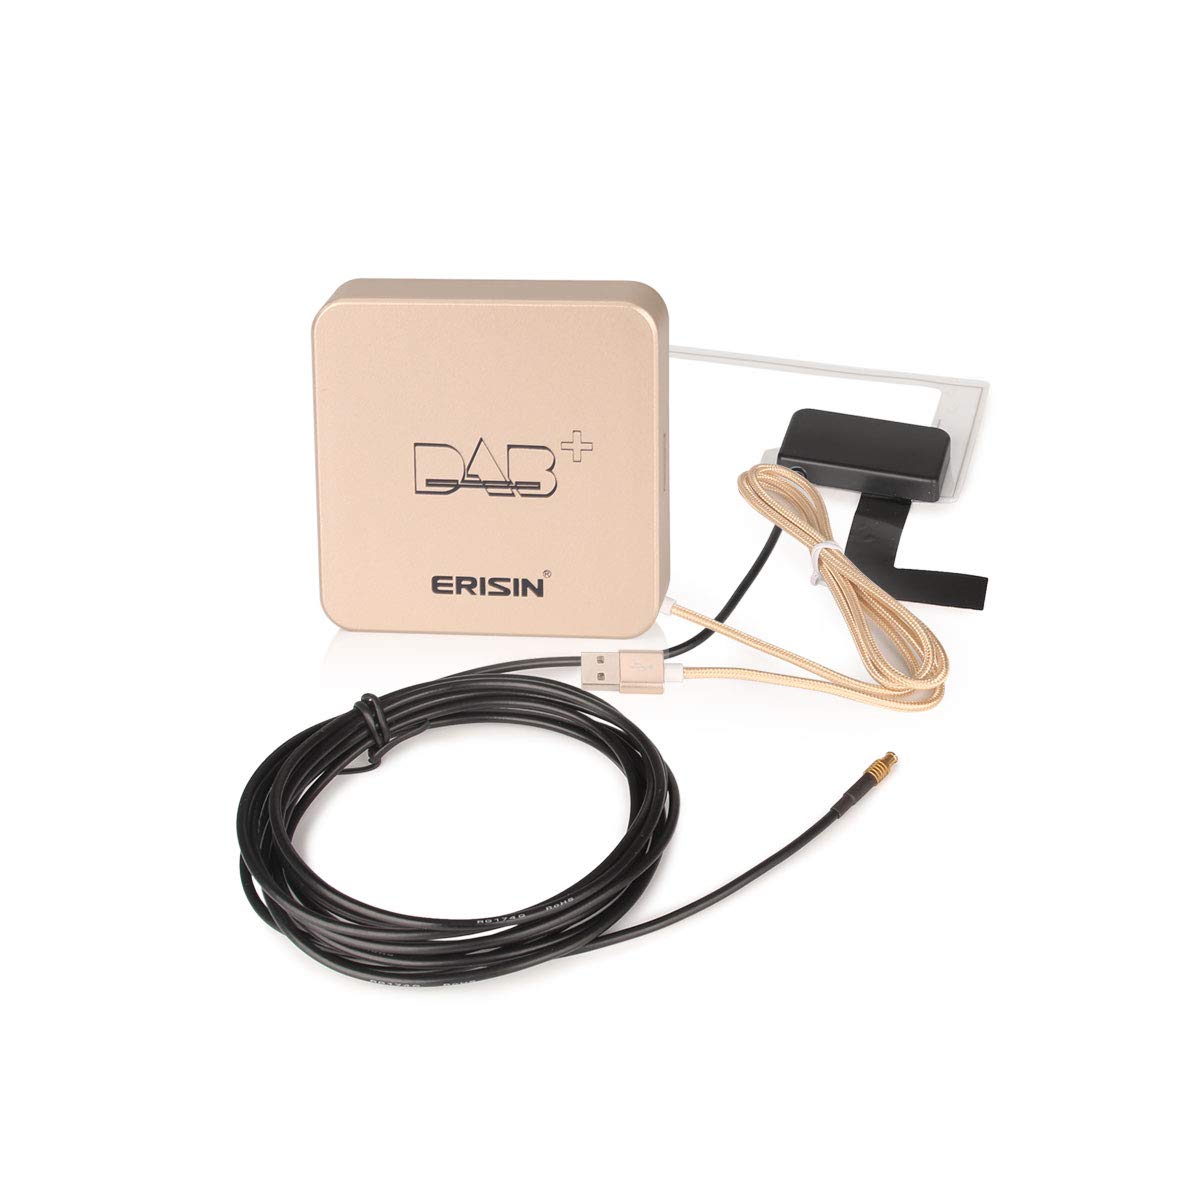 Erisin DAB+ Digital-Radio-Antenne mit verstärktem Antennen-Kit Adapter für Autoradio Android 9.0/10.0/11.0/12.0 USB-Anschluss